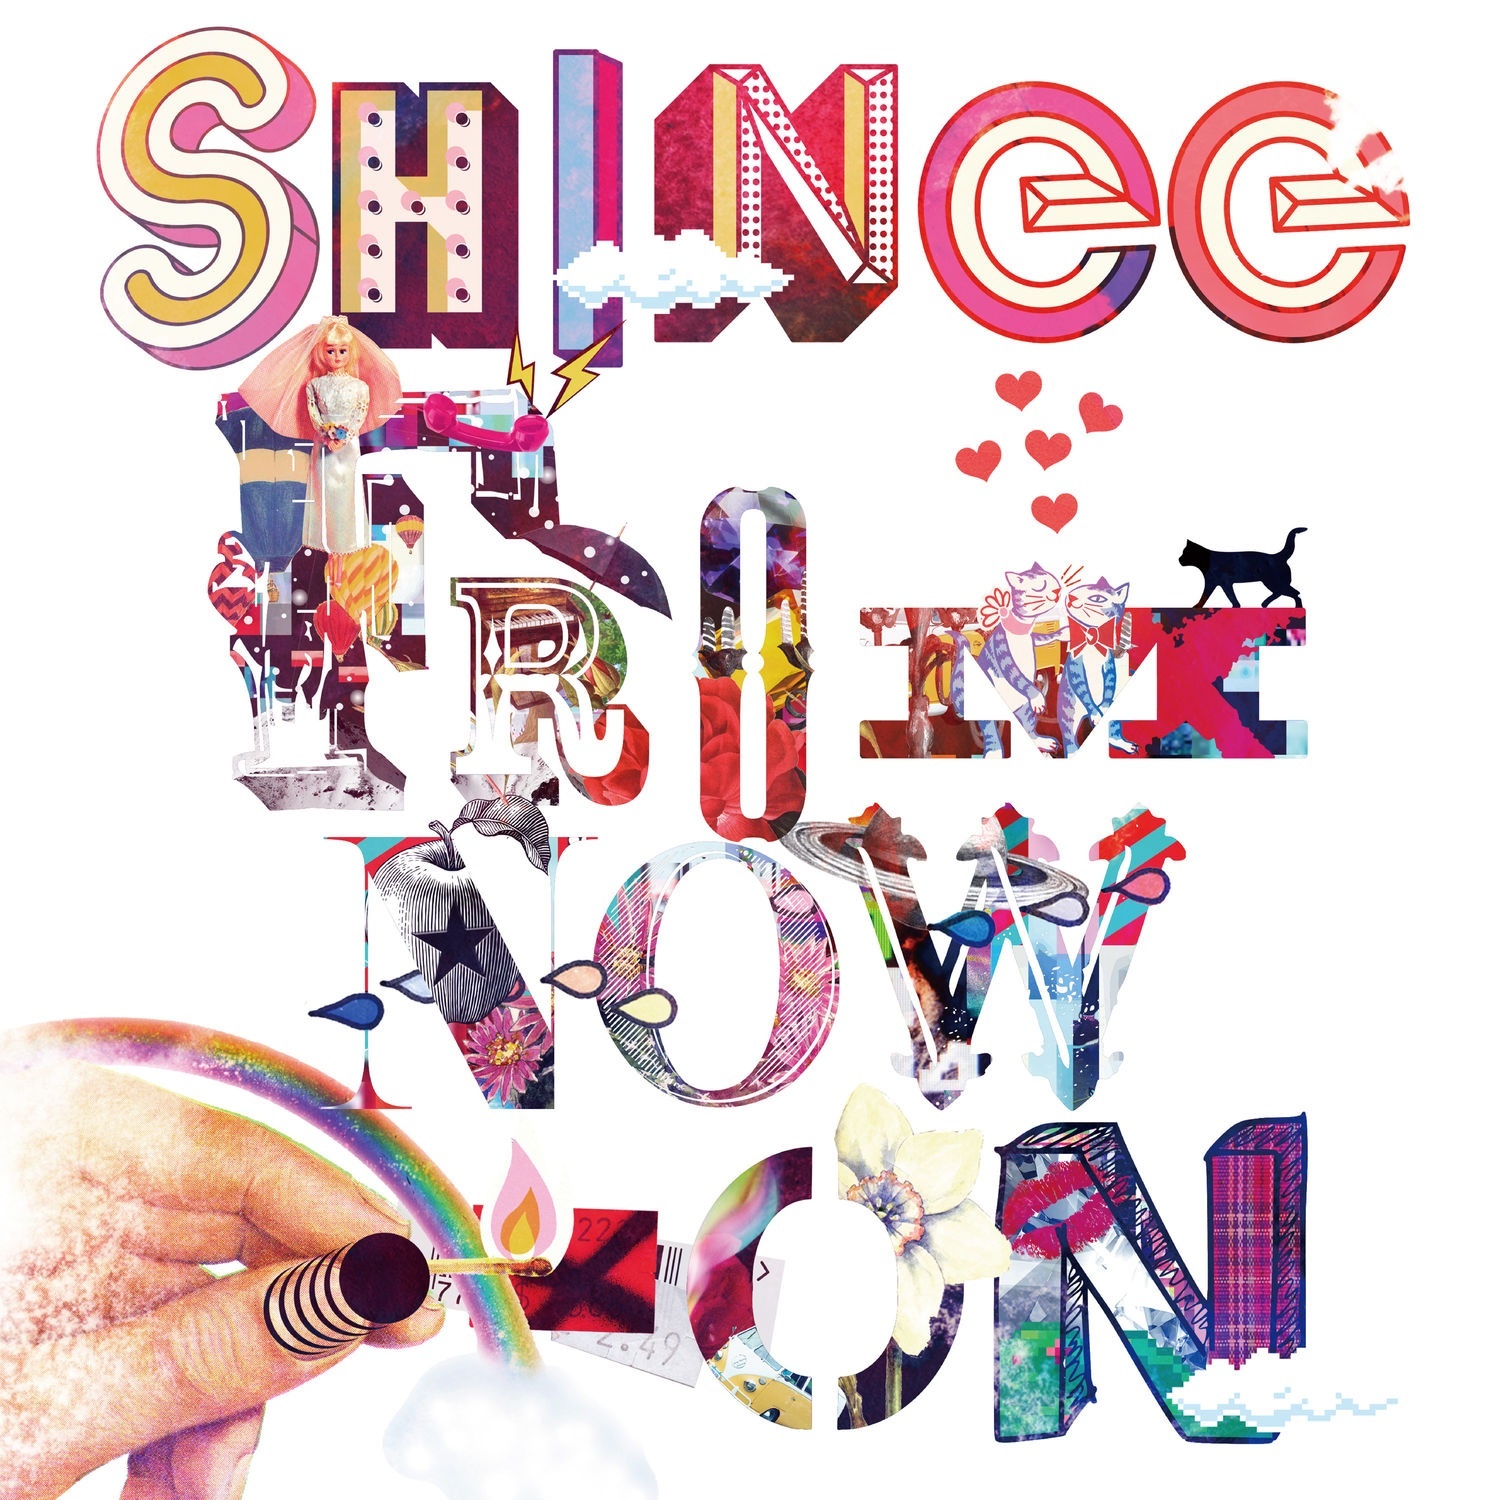 From Now On(韓國男團SHINee演唱歌曲)